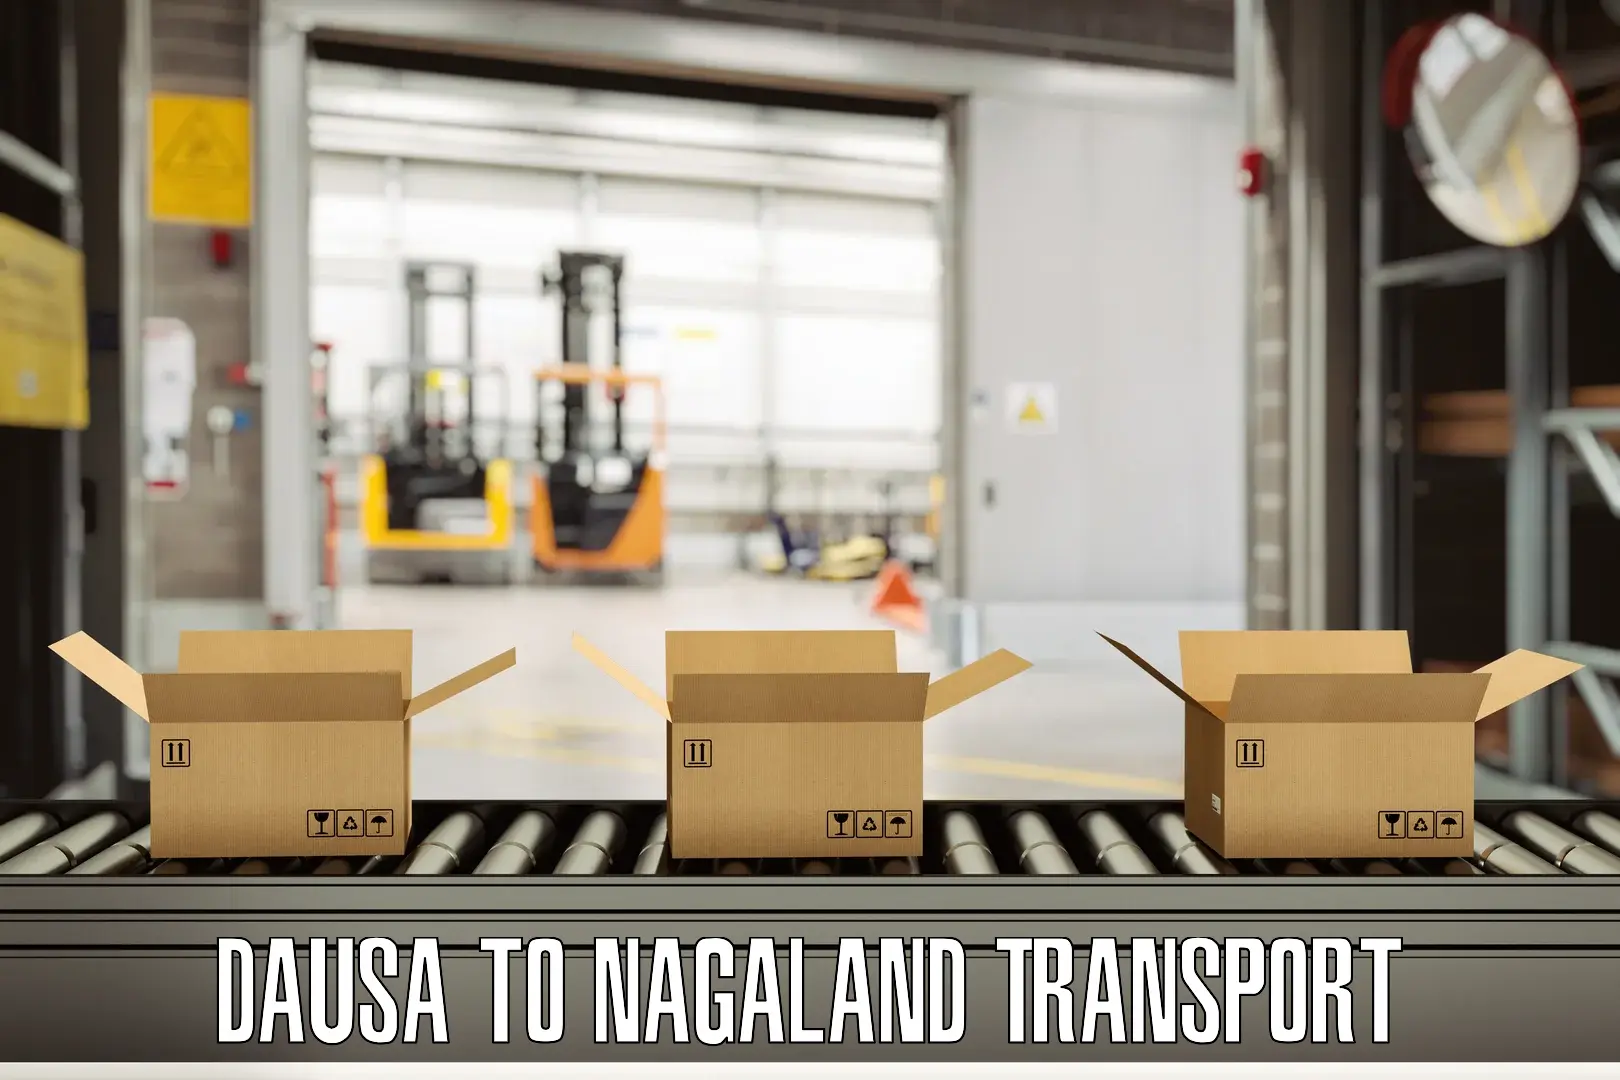 Transport in sharing Dausa to Nagaland